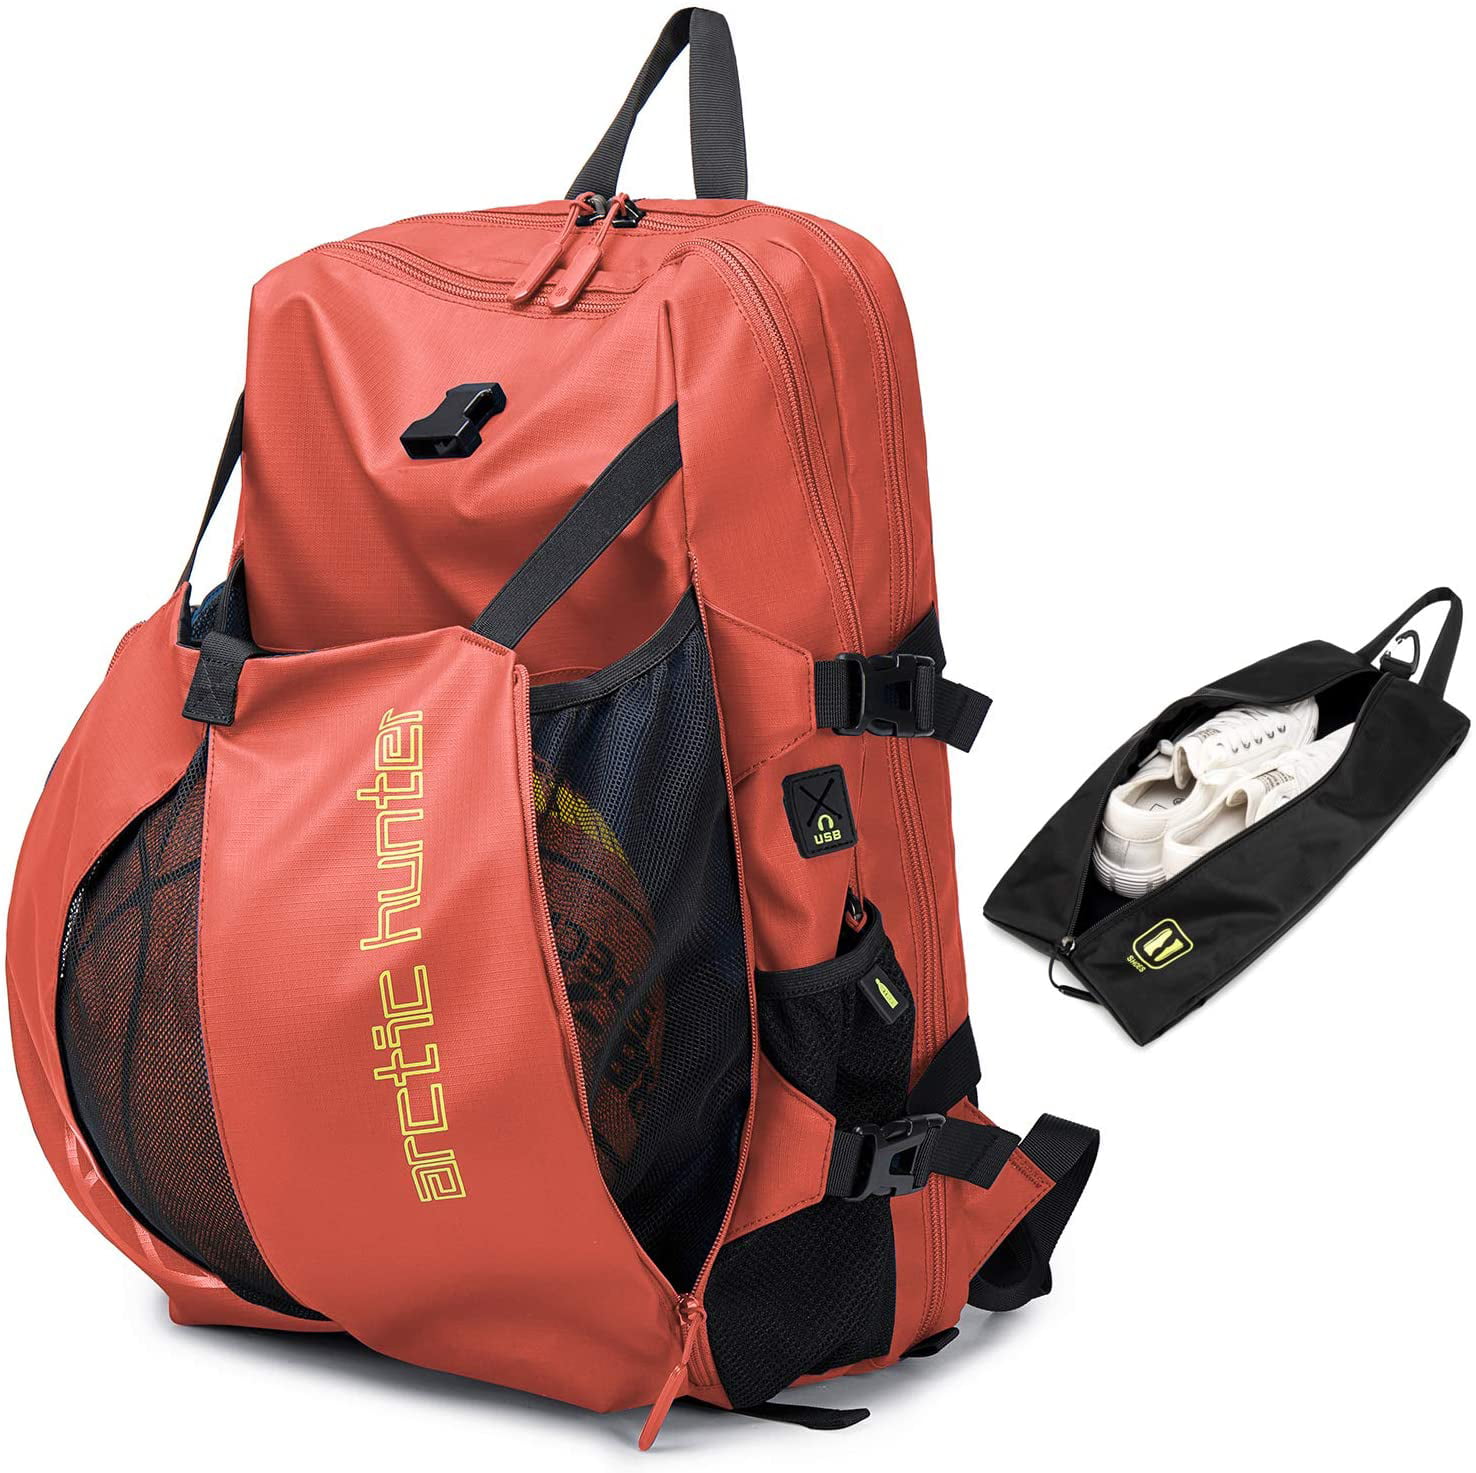 7 Colors Available 18 x 11.5 Heavy-Duty Drawstring Sports Ball Equipment Mesh Bag